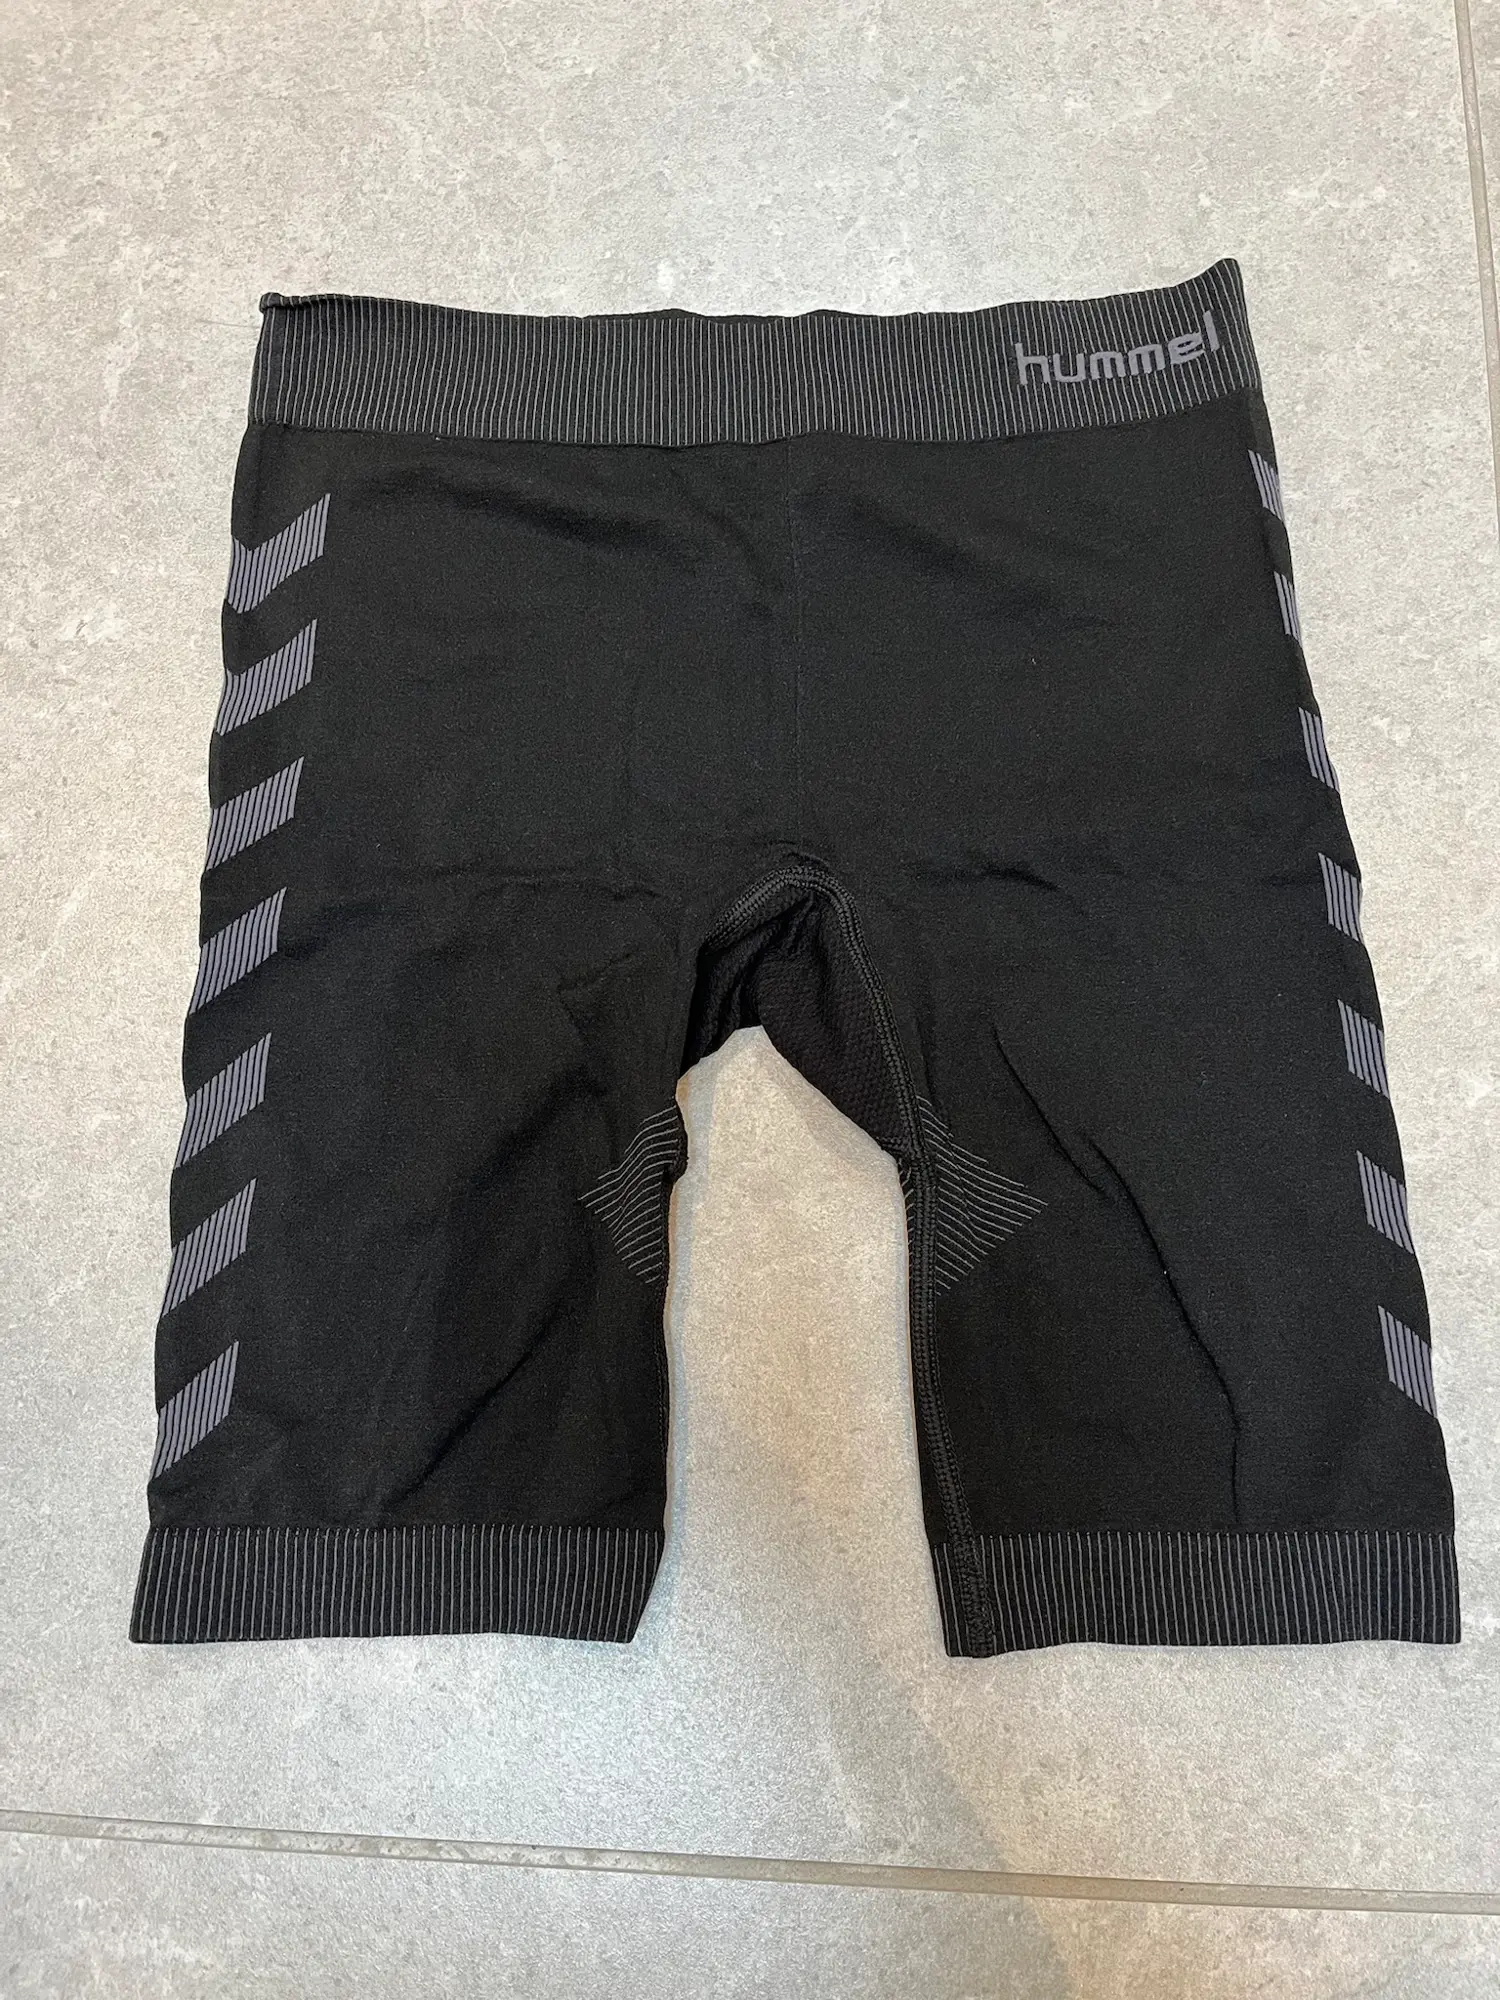 Hummel shorts